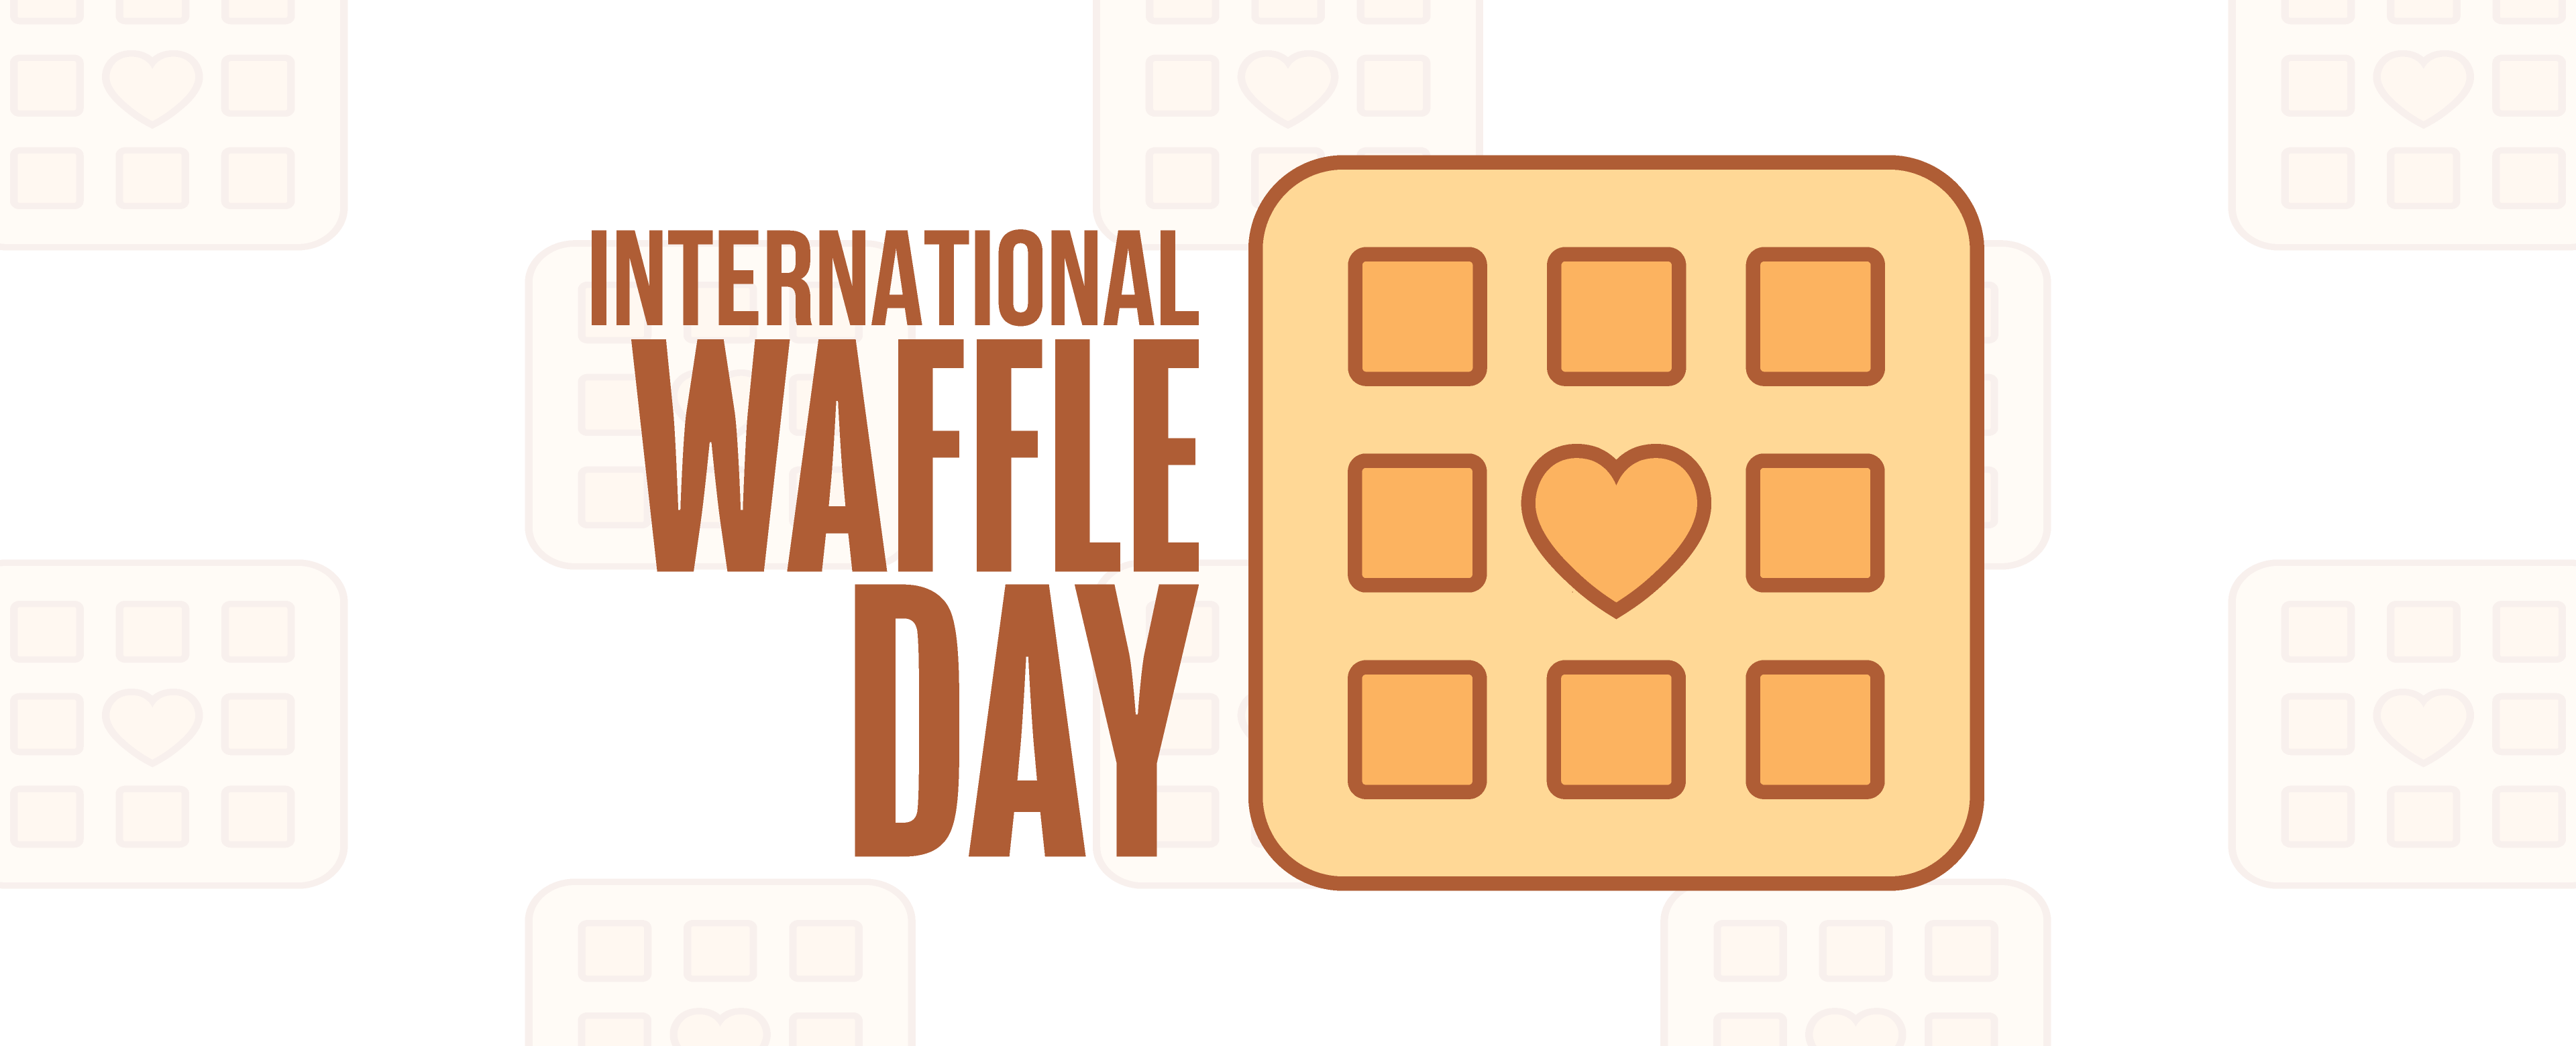 International Waffle Day